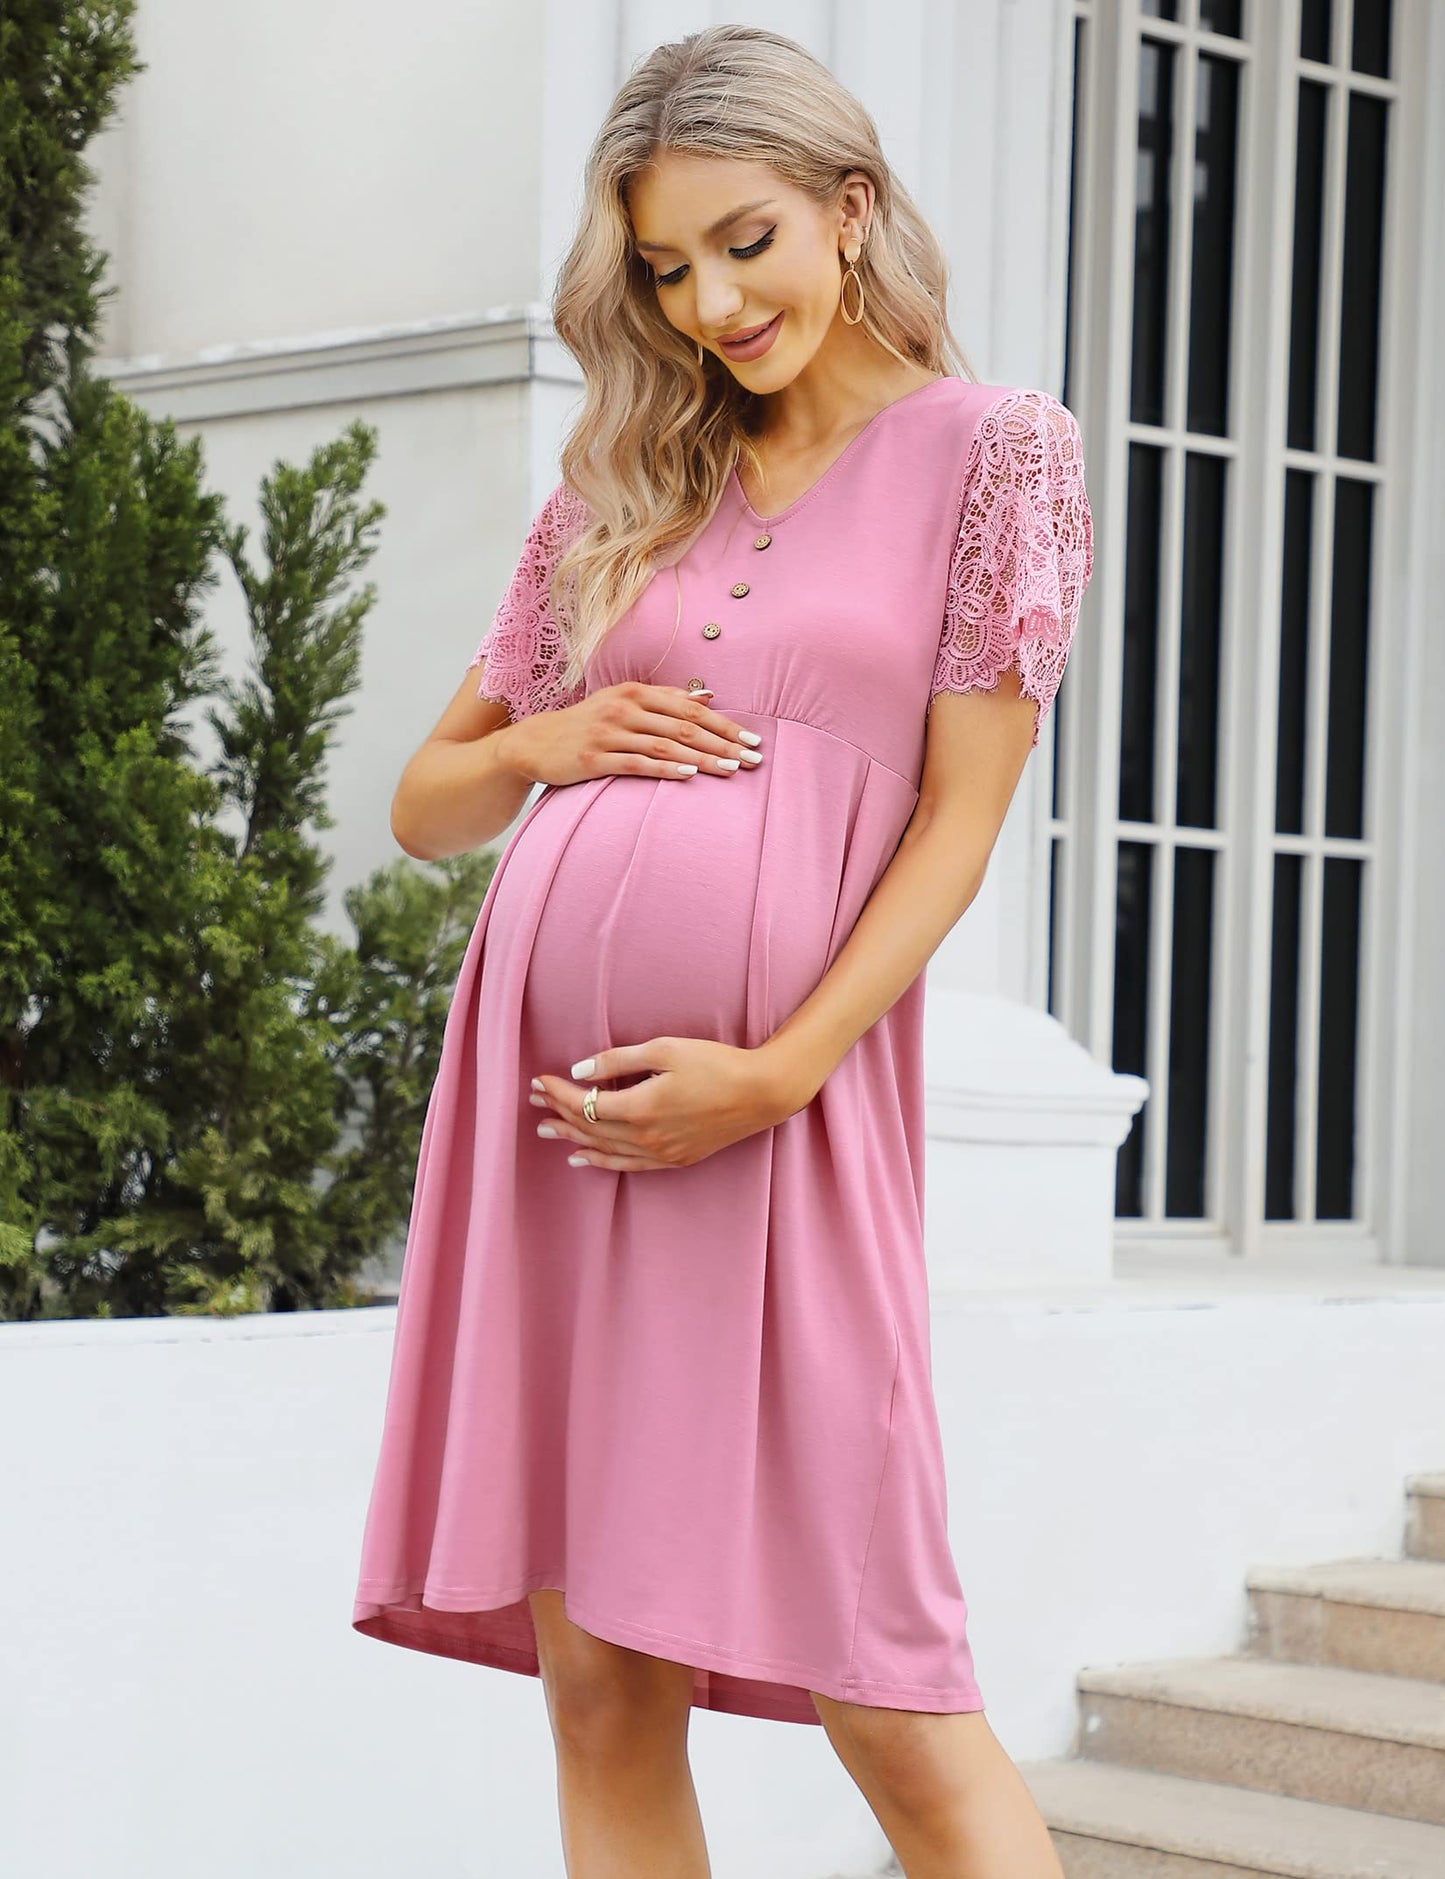 Maternity Dress Women's Off Shoulder Casual Midi Dress